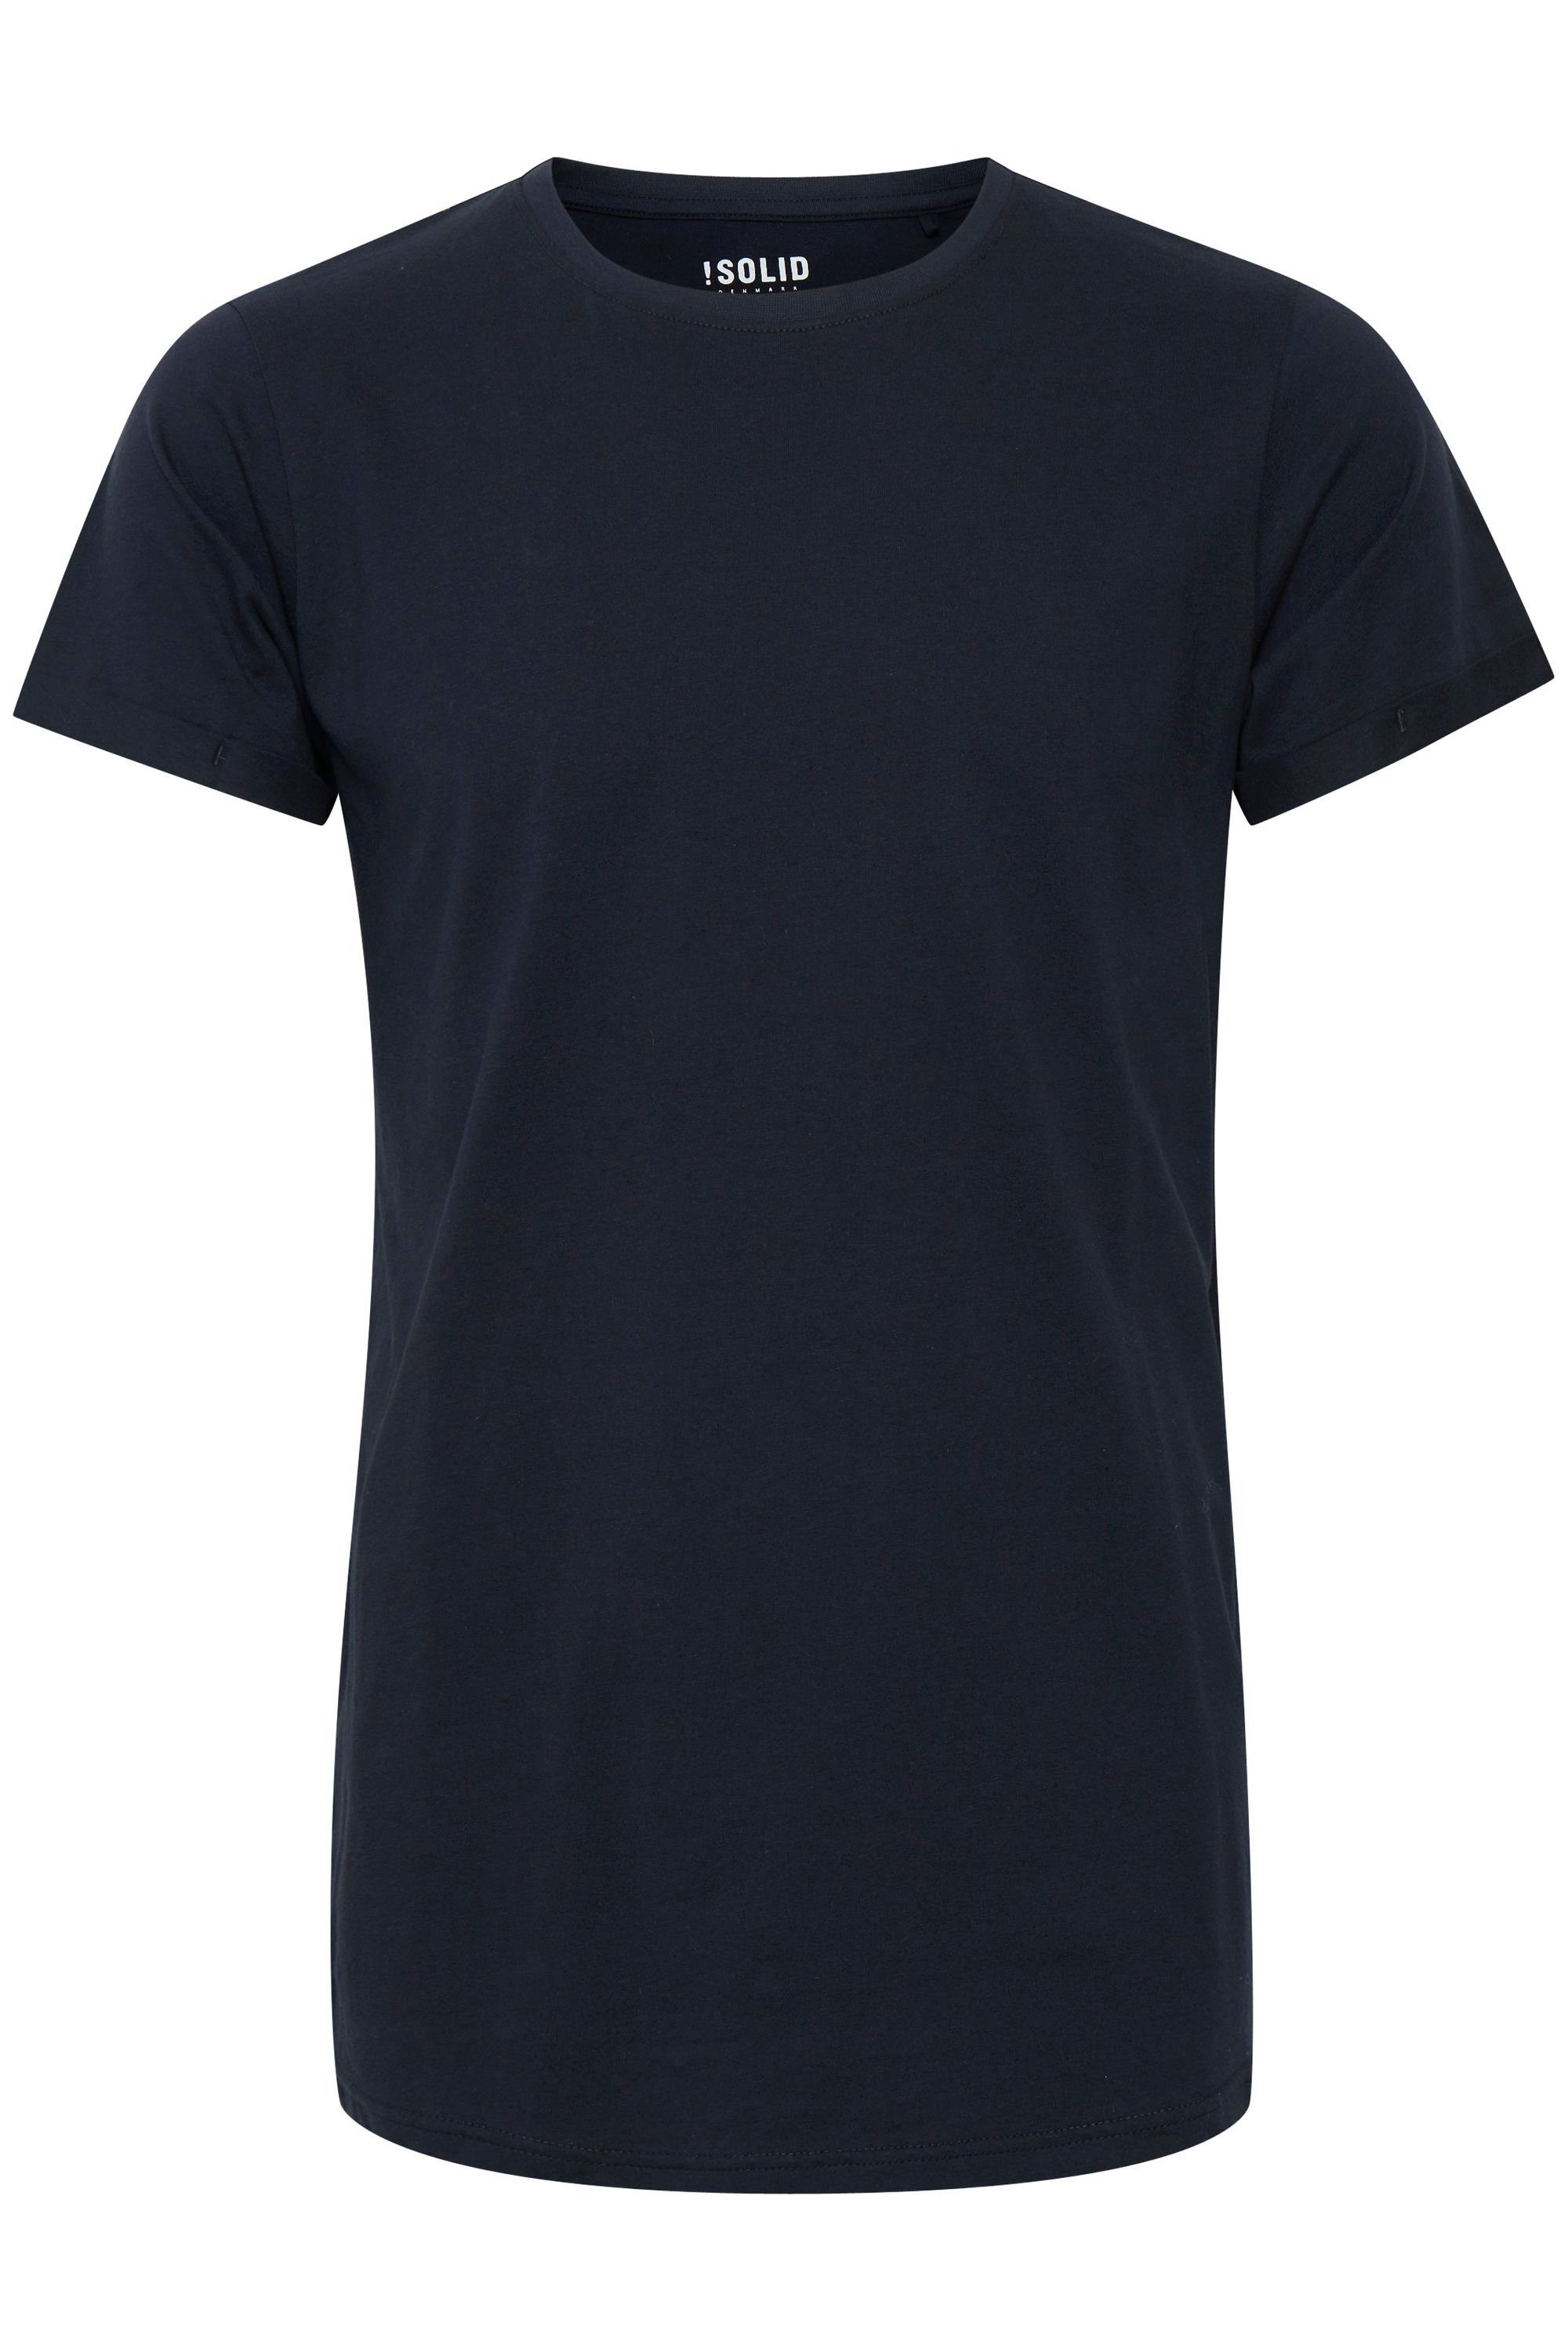 !Solid Longshirt SDLongo T-Shirt Insignia Blue (194010)